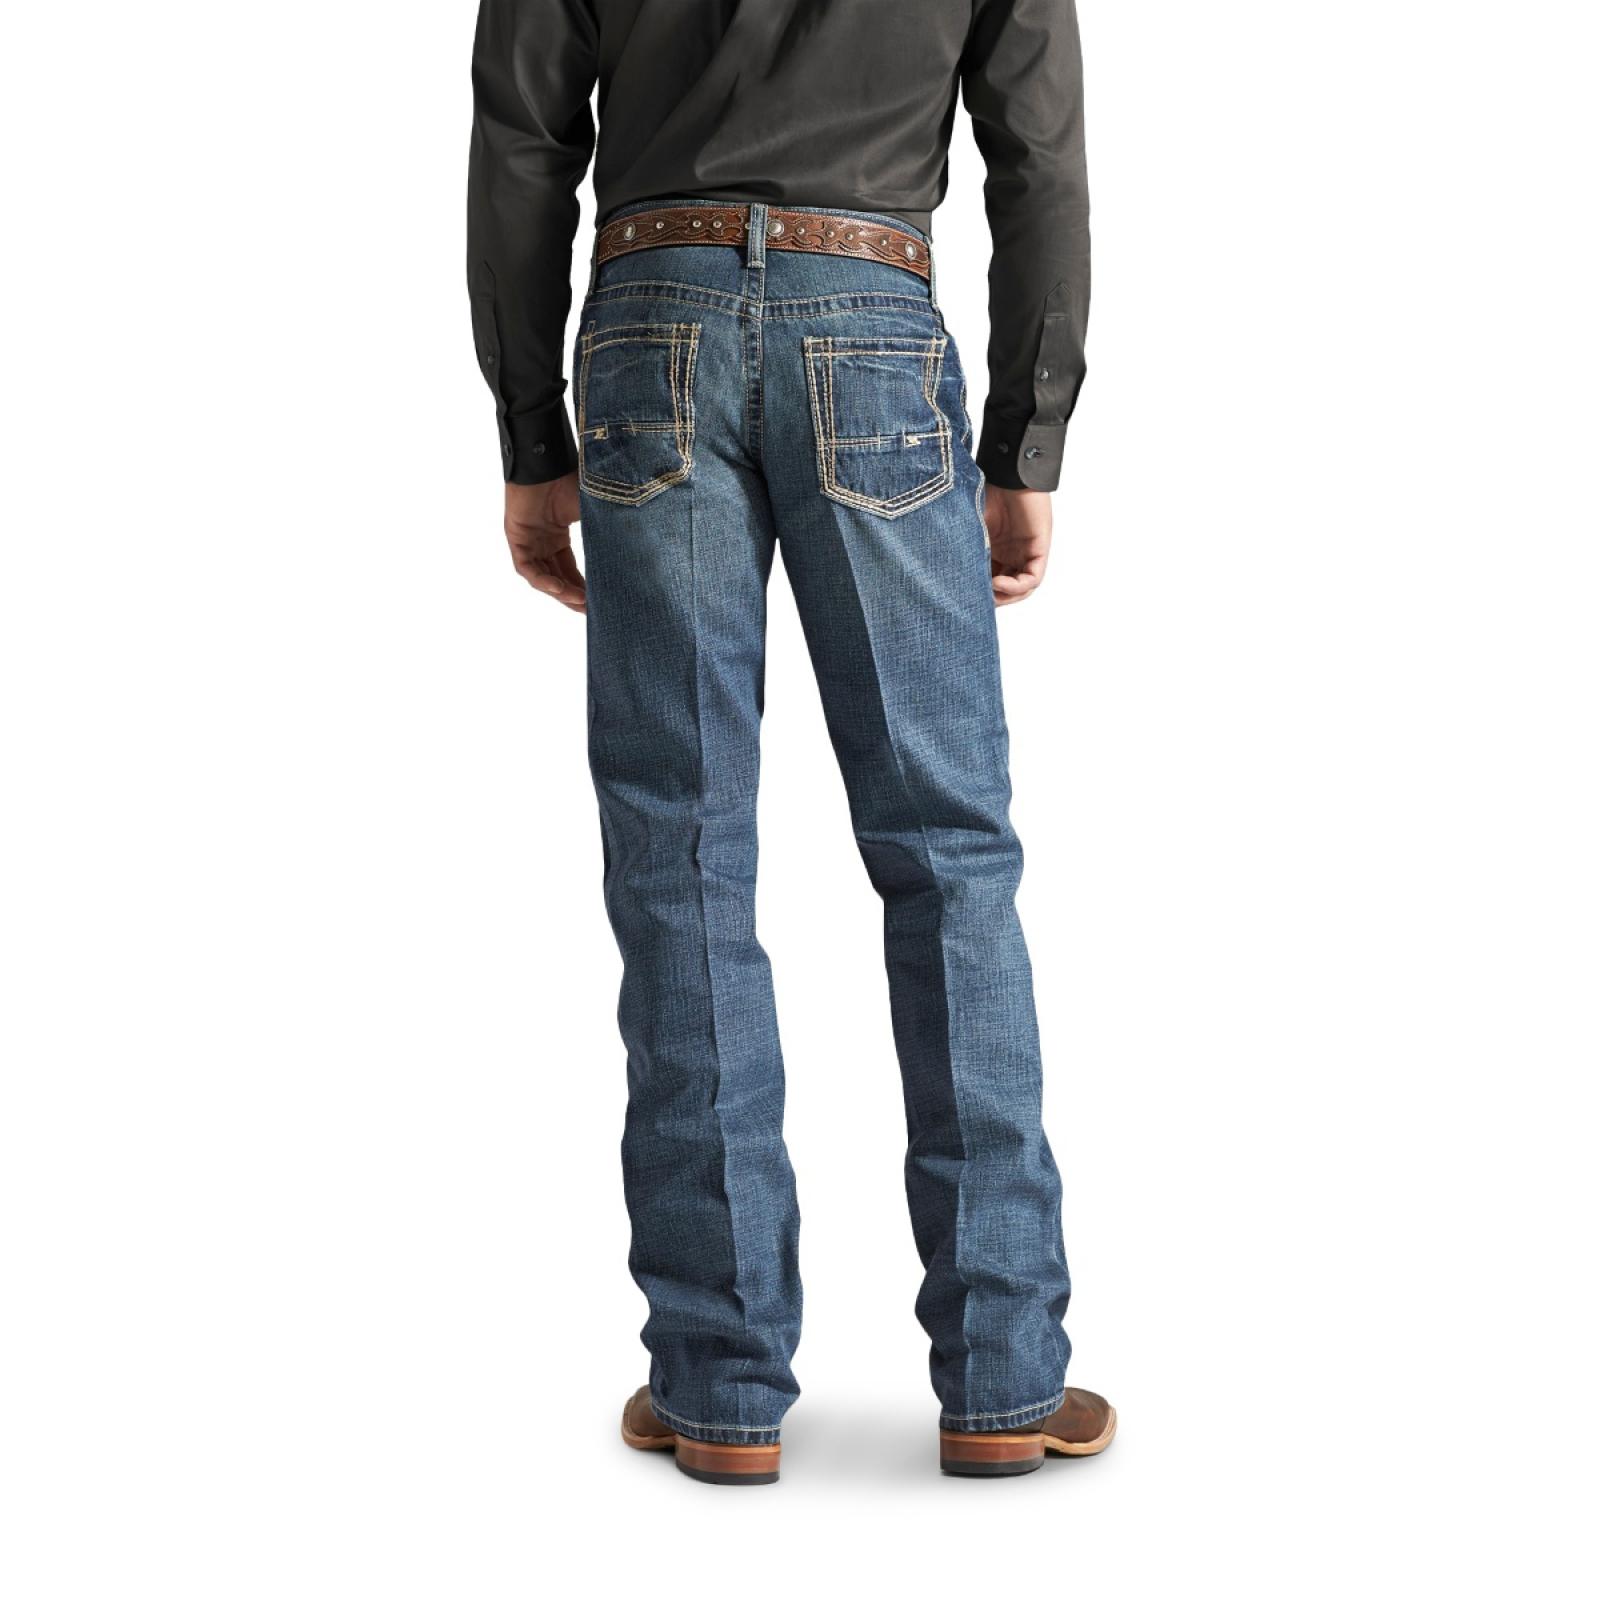 Ariat Men's M4 Boundary Low Rise Jeans